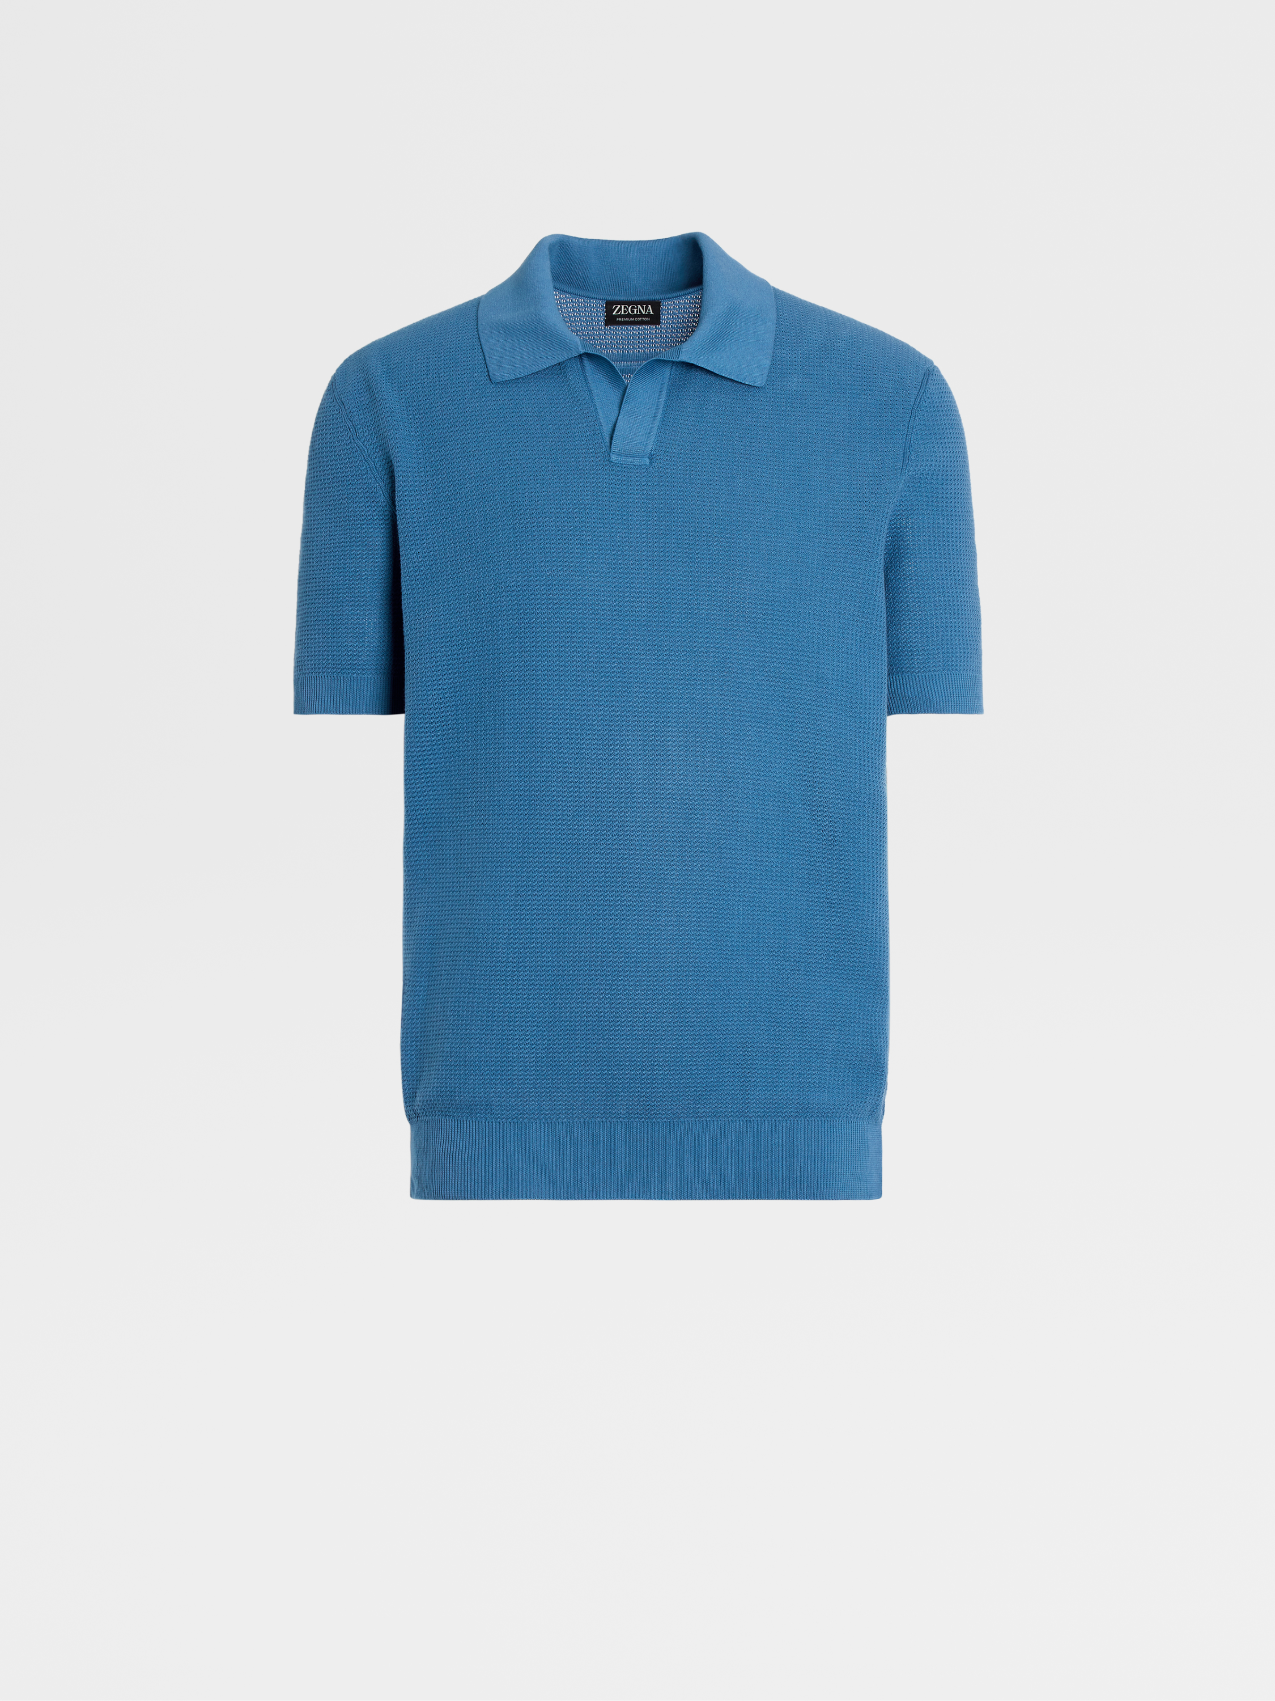 Teal Blue Premium Cotton Jacquard Short-sleeve Knit Polo